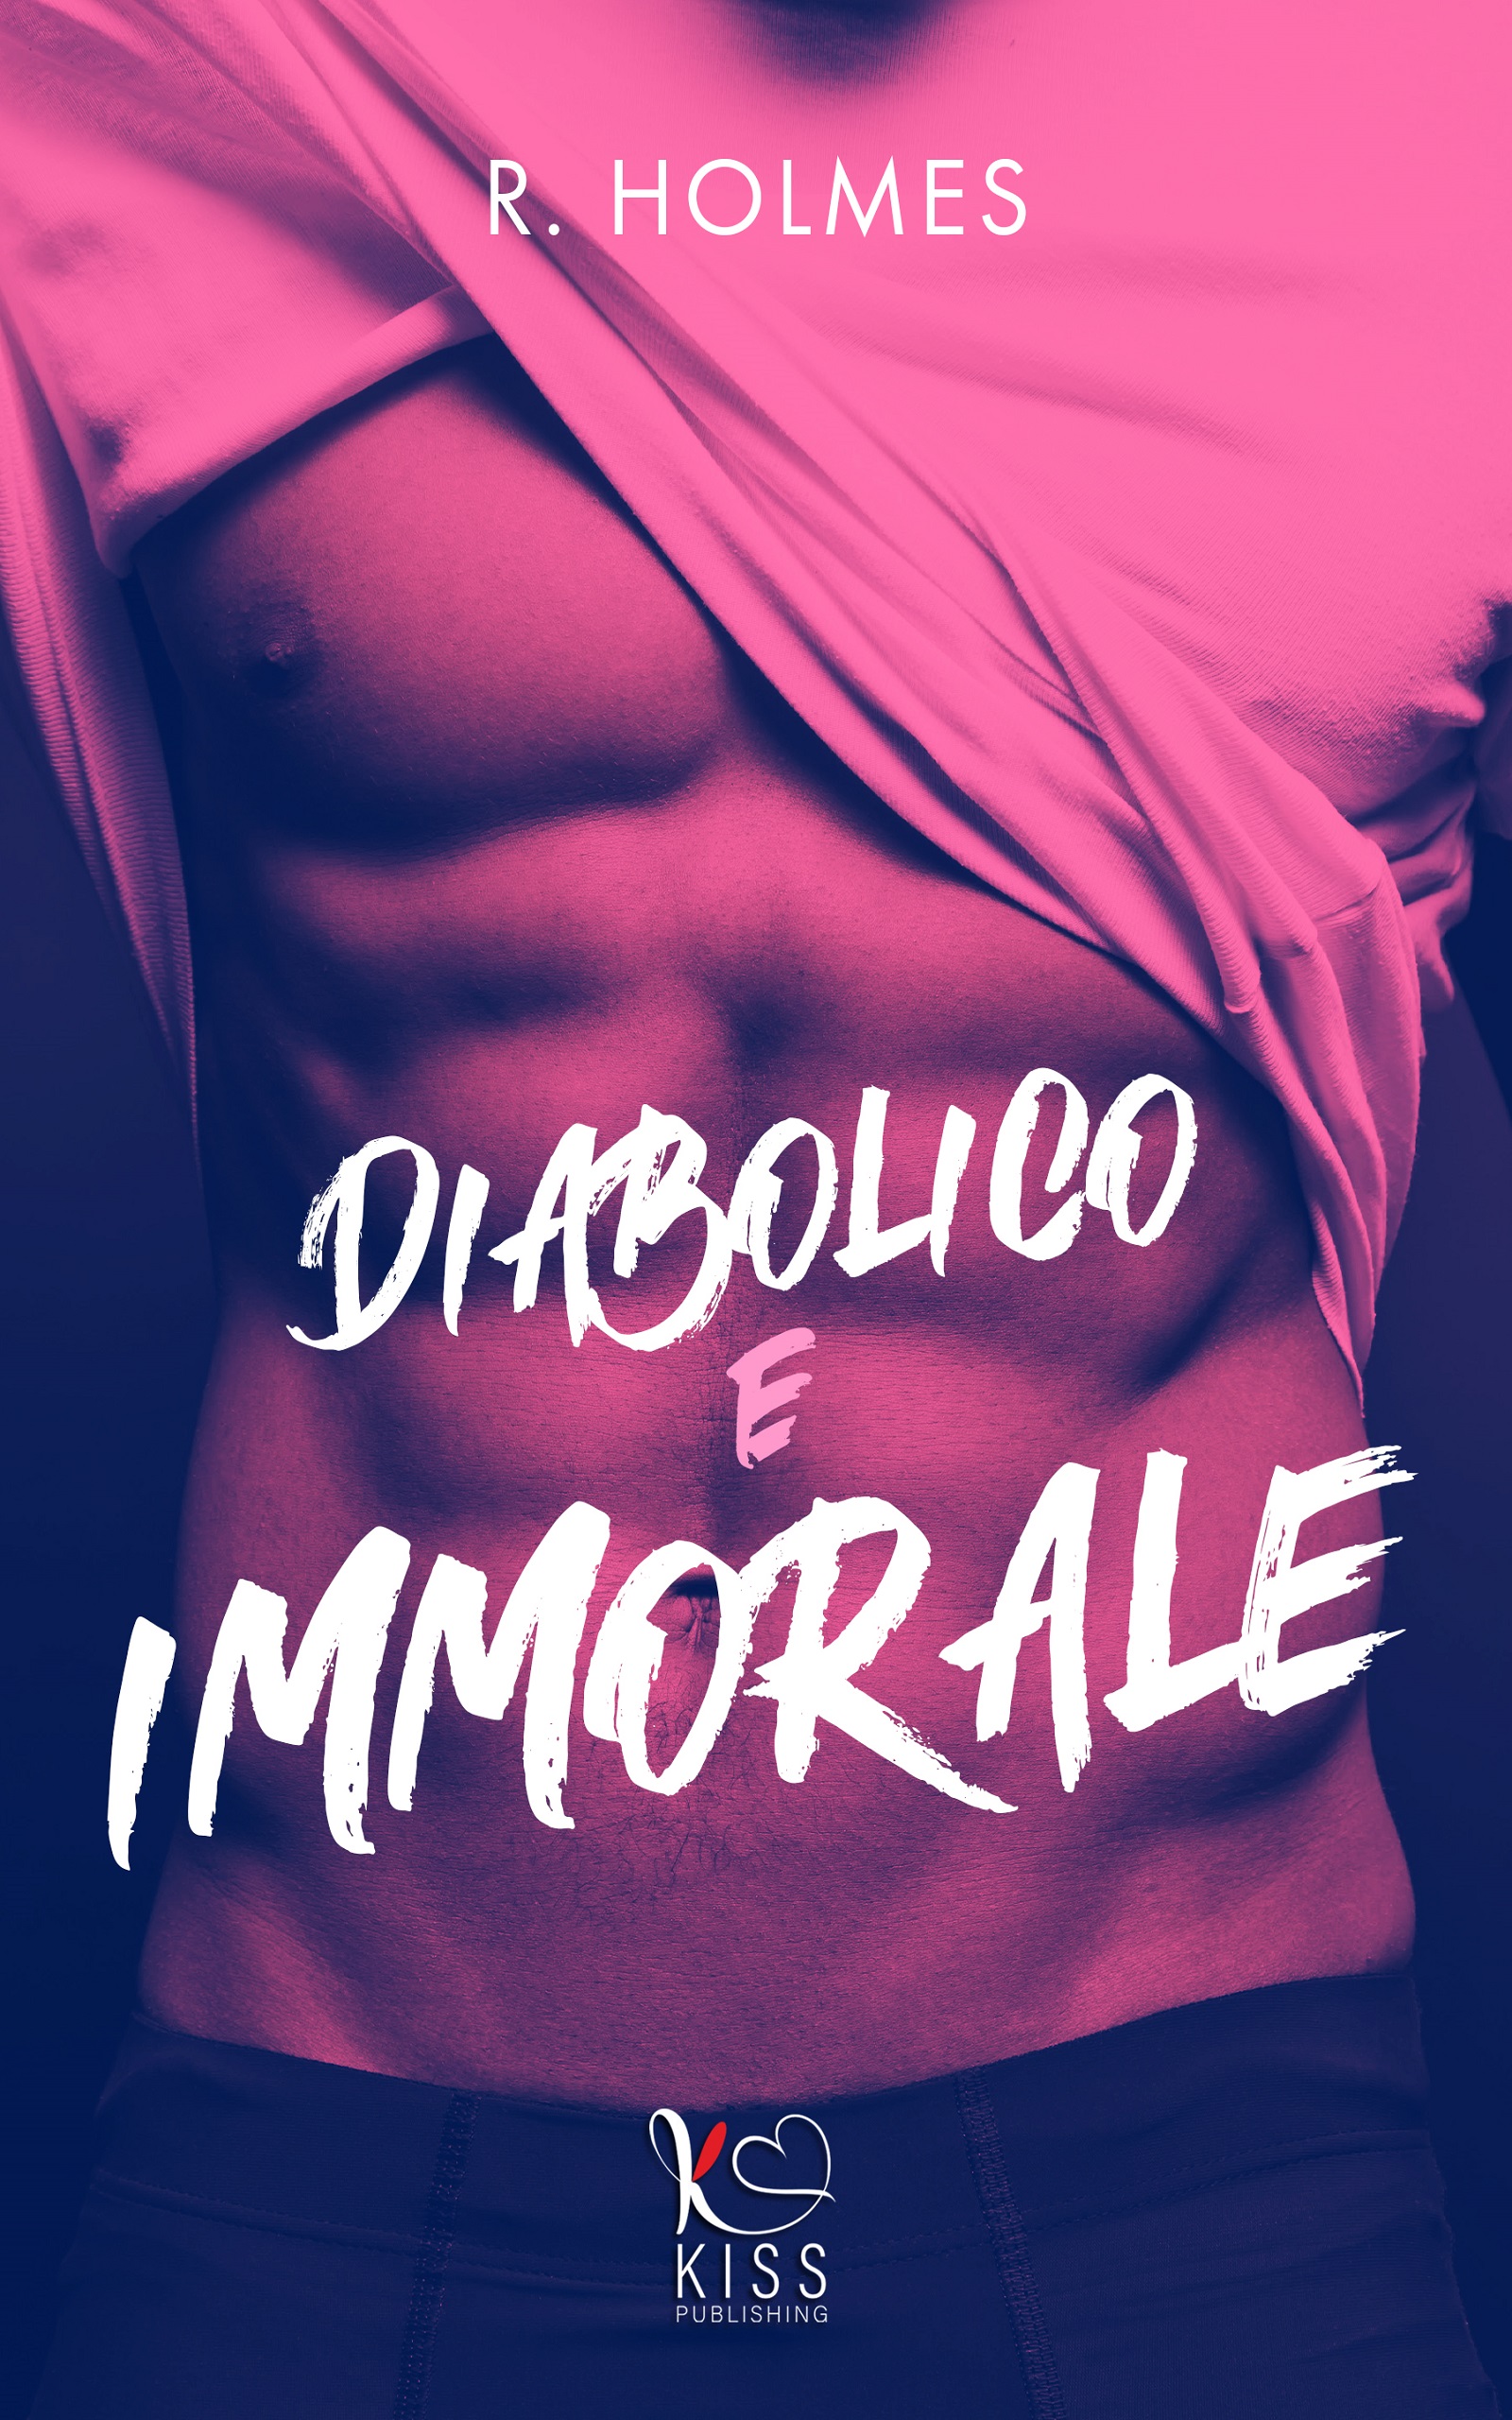 DIABOLICO_E_IMMORALE_R_HOLMES_jpeg300 (1)